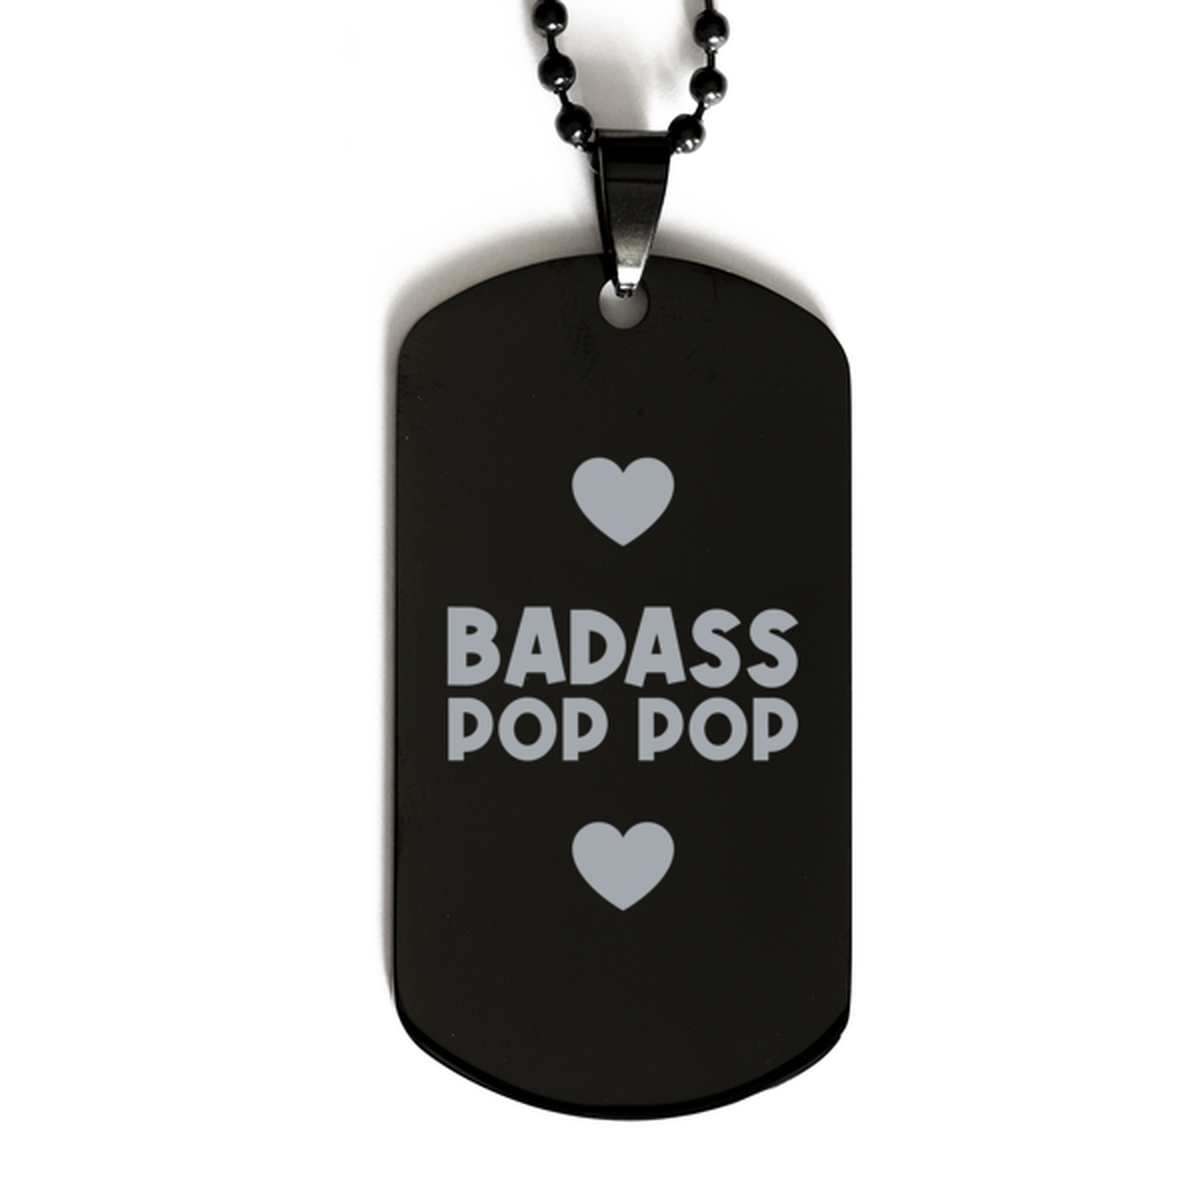 Pop Pop Black Dog Tag, Badass Pop Pop, Funny Family Gifts  Necklace For Pop Pop From Granddaughter Grandson